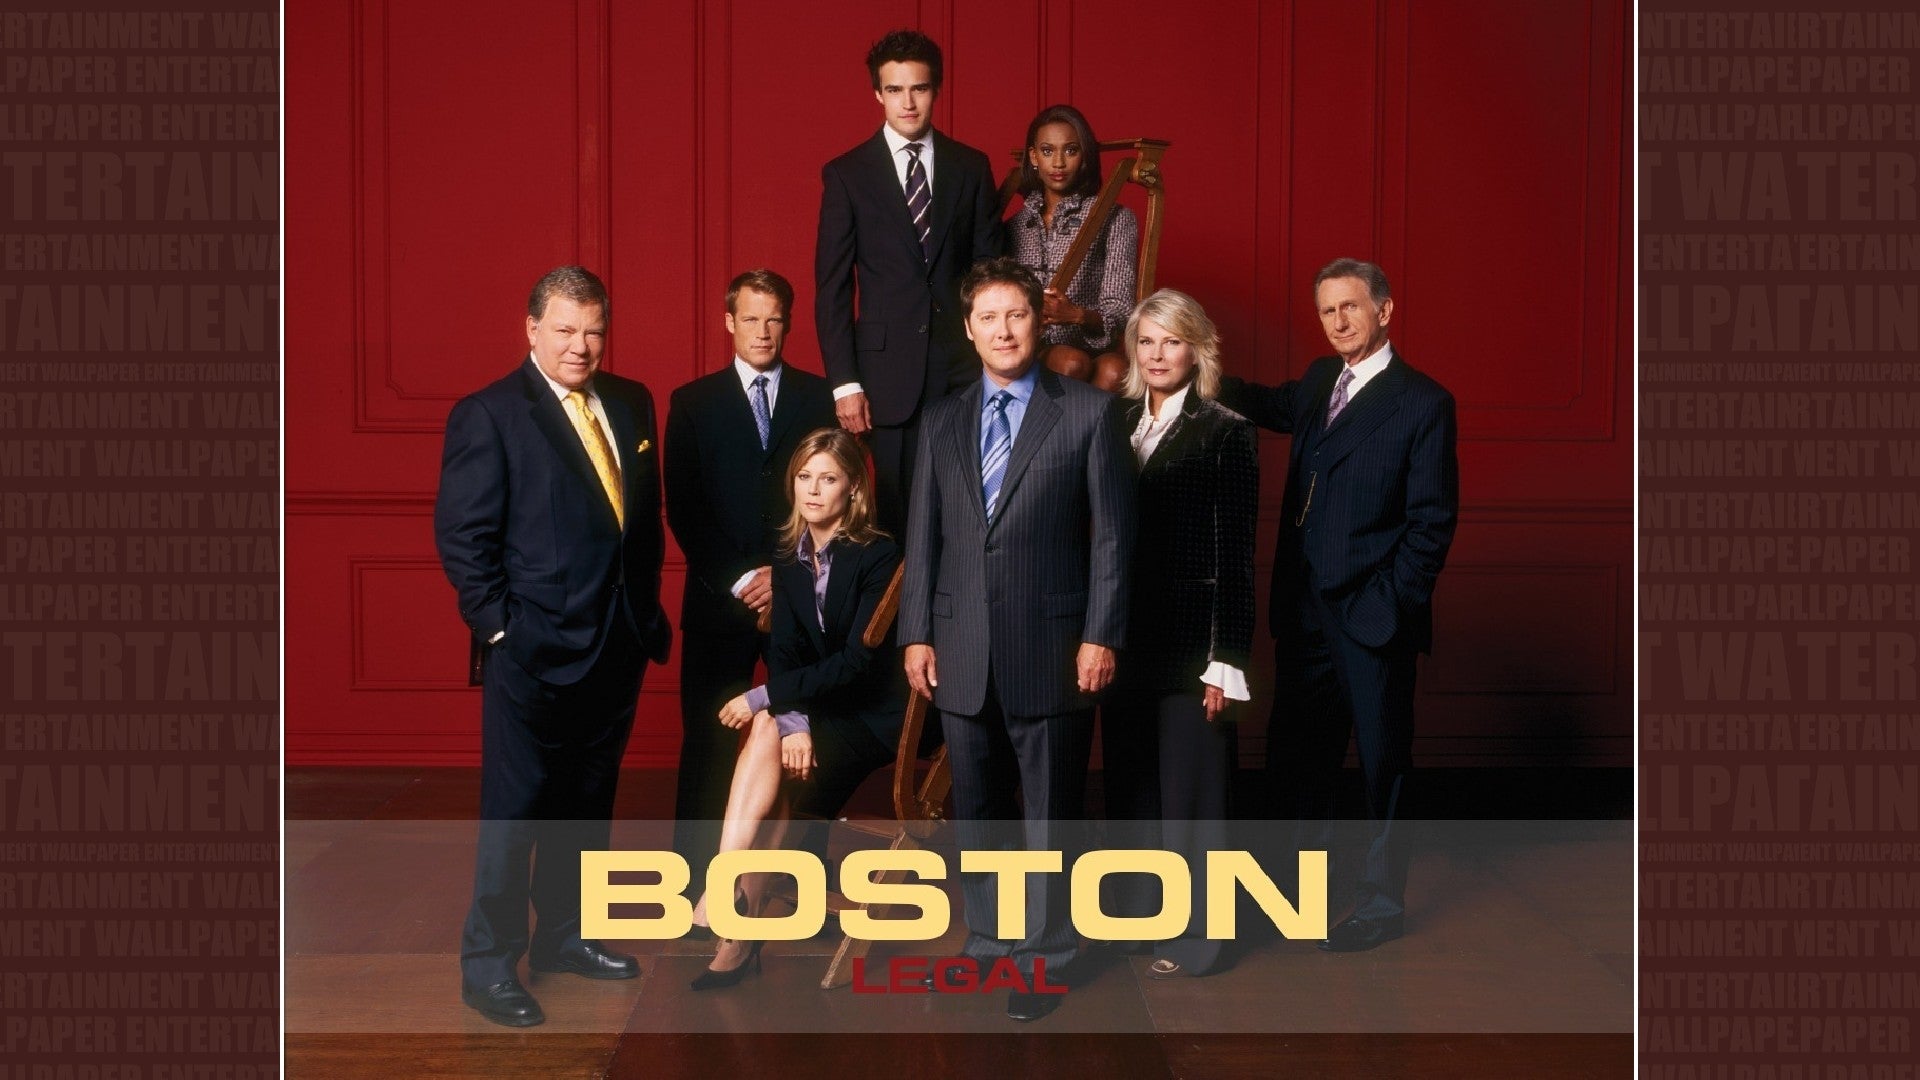 Boston Legal: The Complete Series - Seasons 1-5